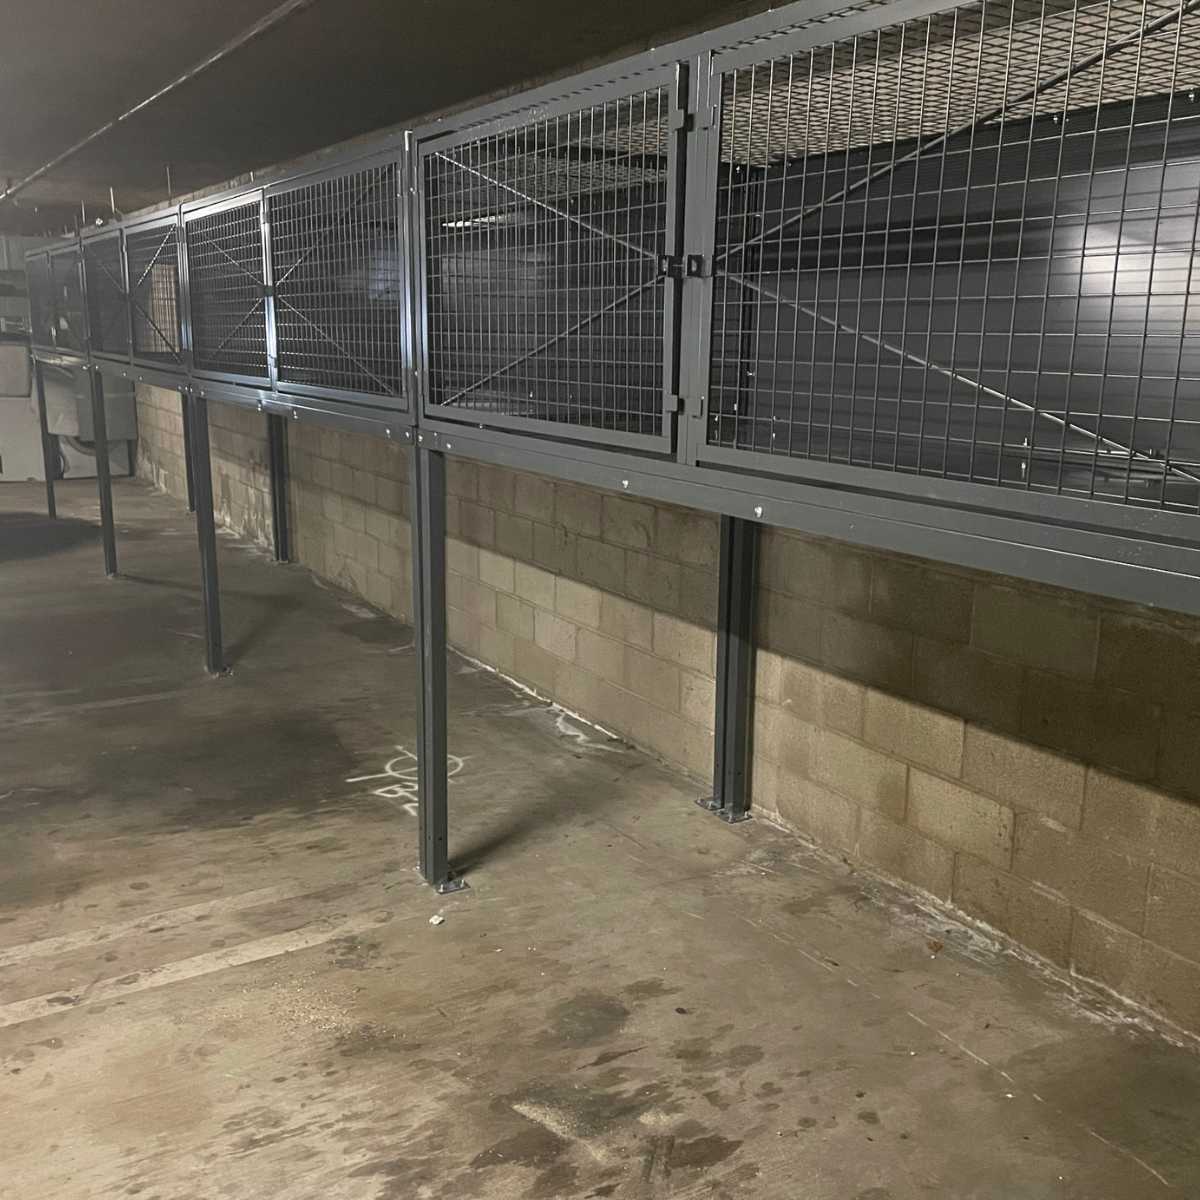 mesh storage bins secured above parking space